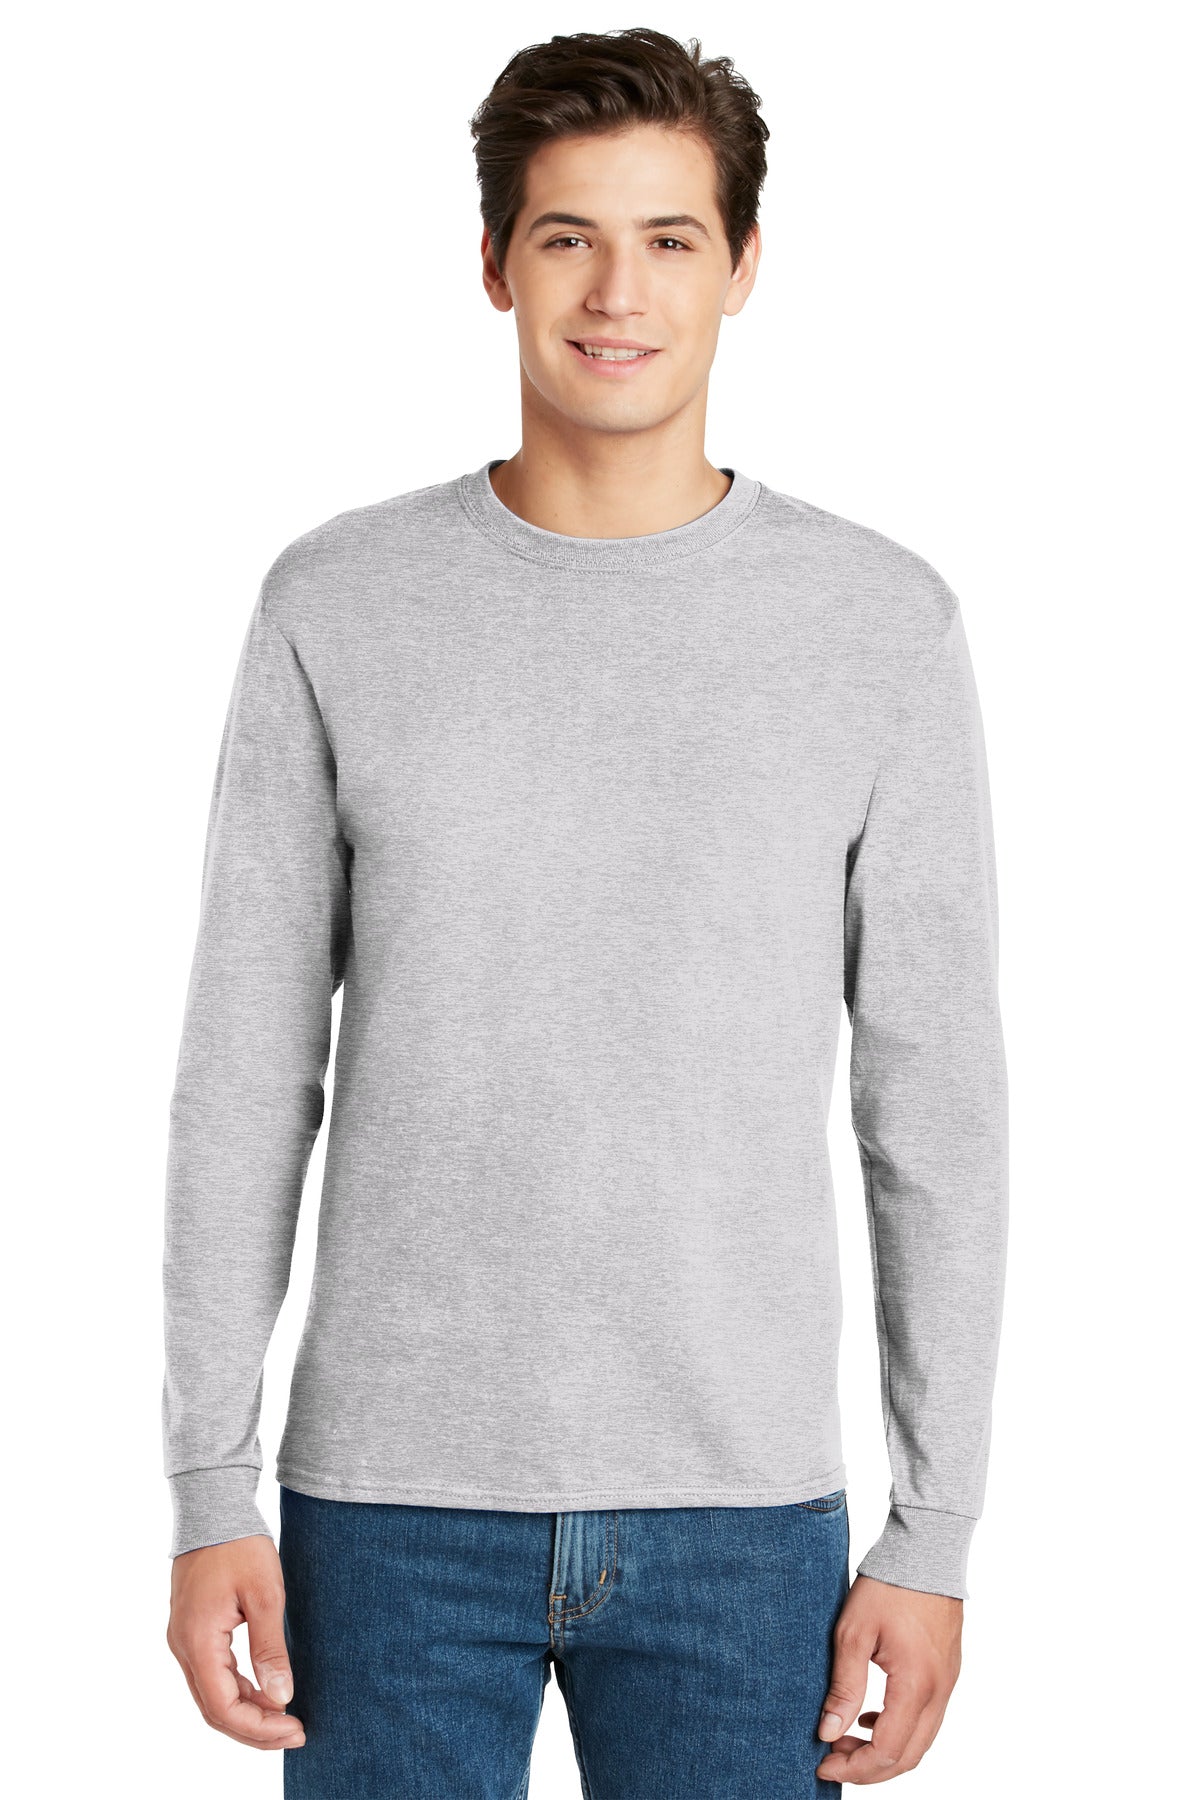 Hanes® - Authentic 100% Cotton Long Sleeve T-Shirt.  5586